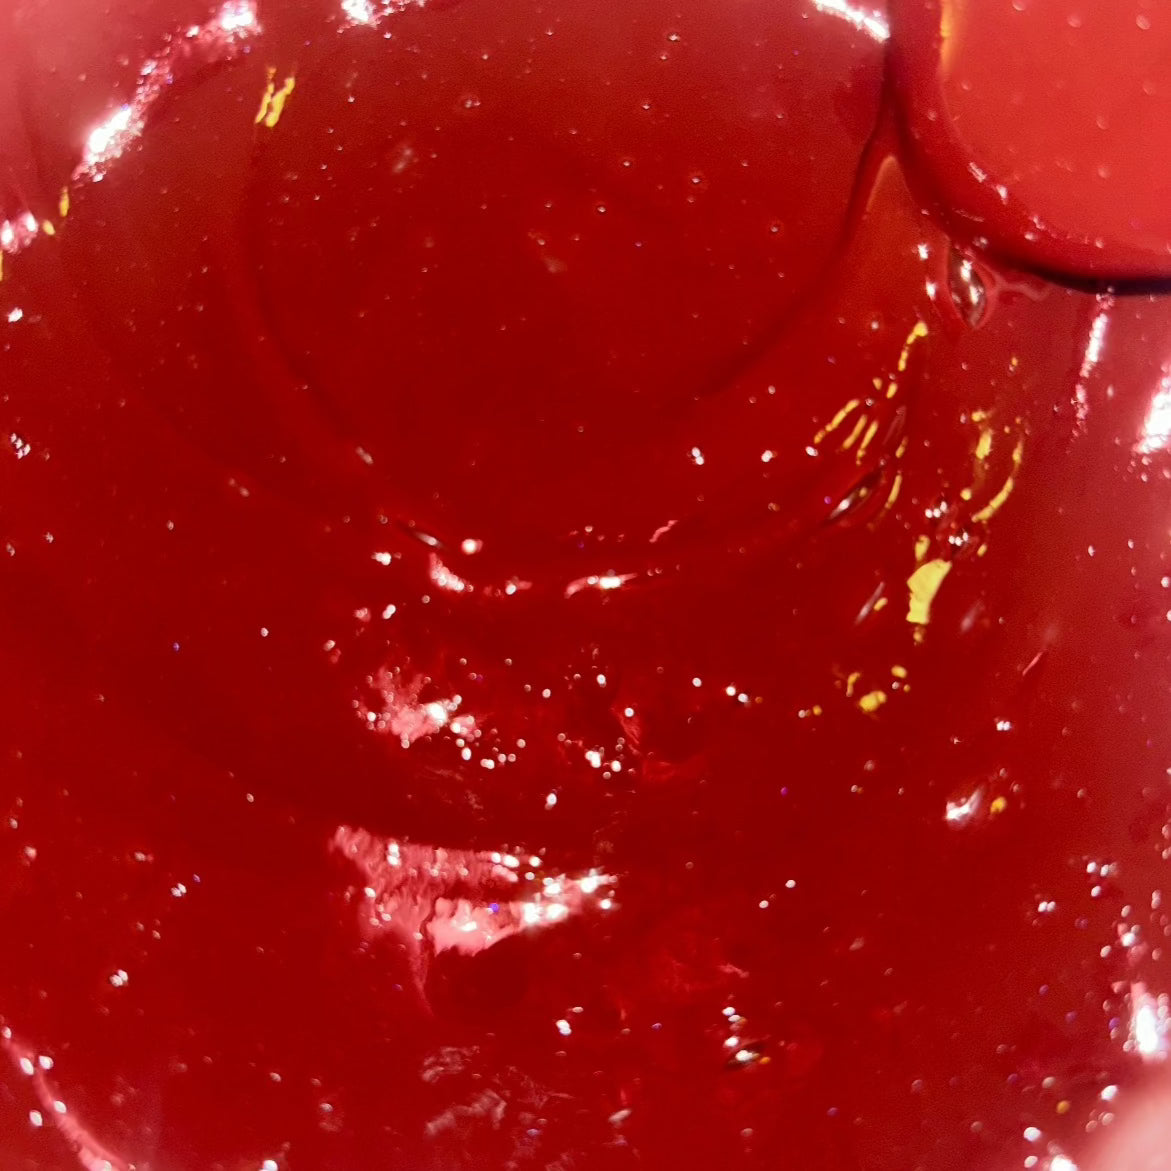 cherry deep red lip gloss swatch making